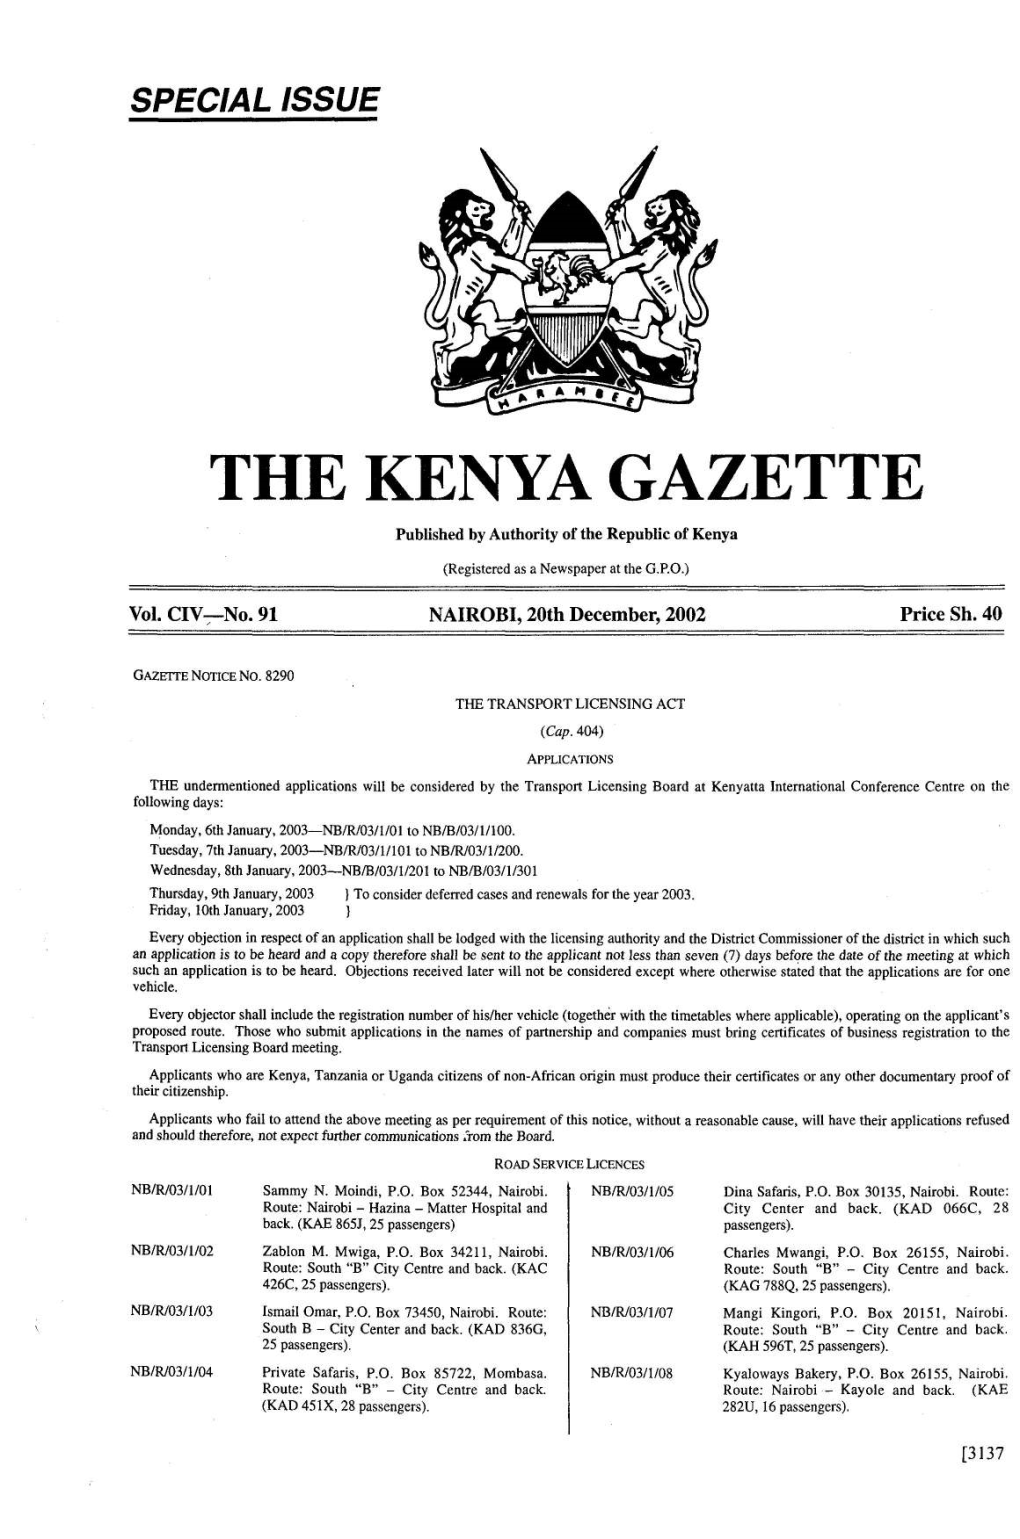 THE KENYA GAZETTE 20Th December, 2002